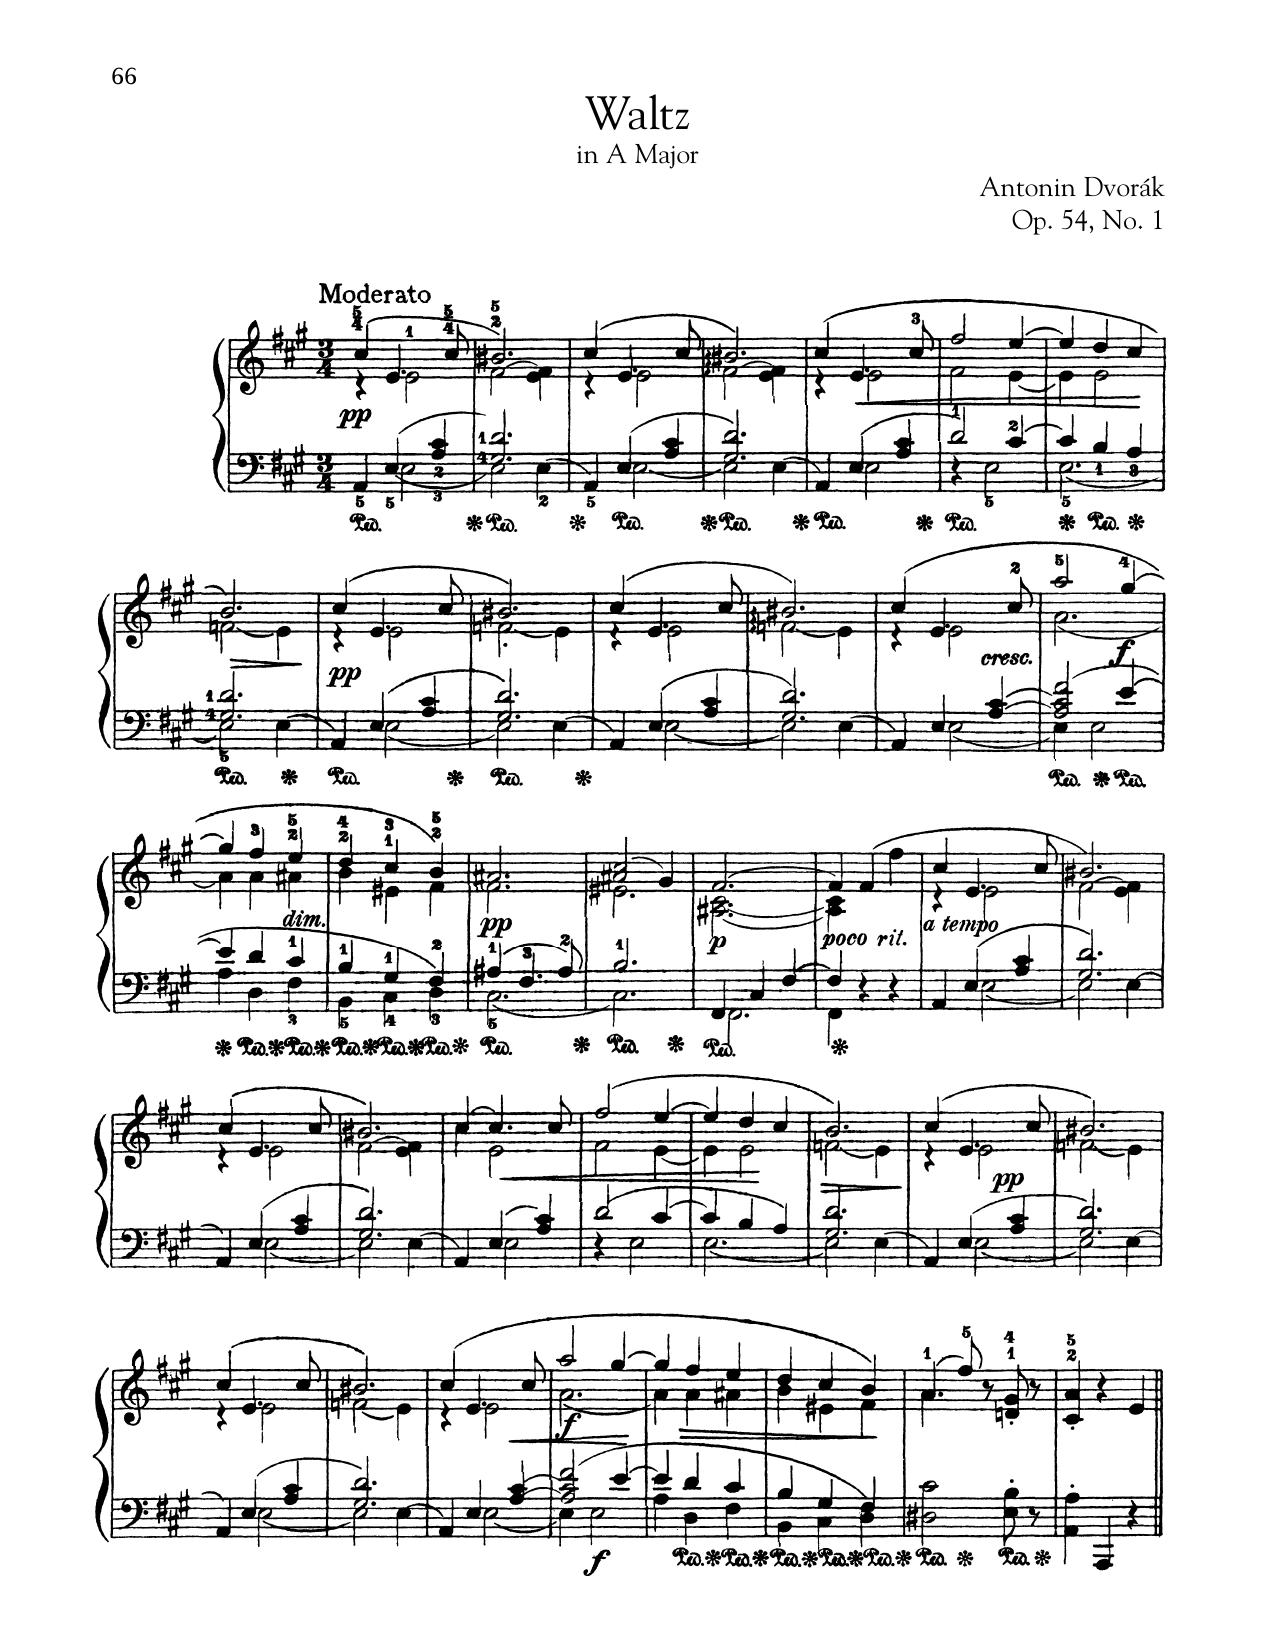 Antonín Dvorák Waltz In A Major, Op. 54, No. 1 Sheet Music Notes & Chords for Piano - Download or Print PDF